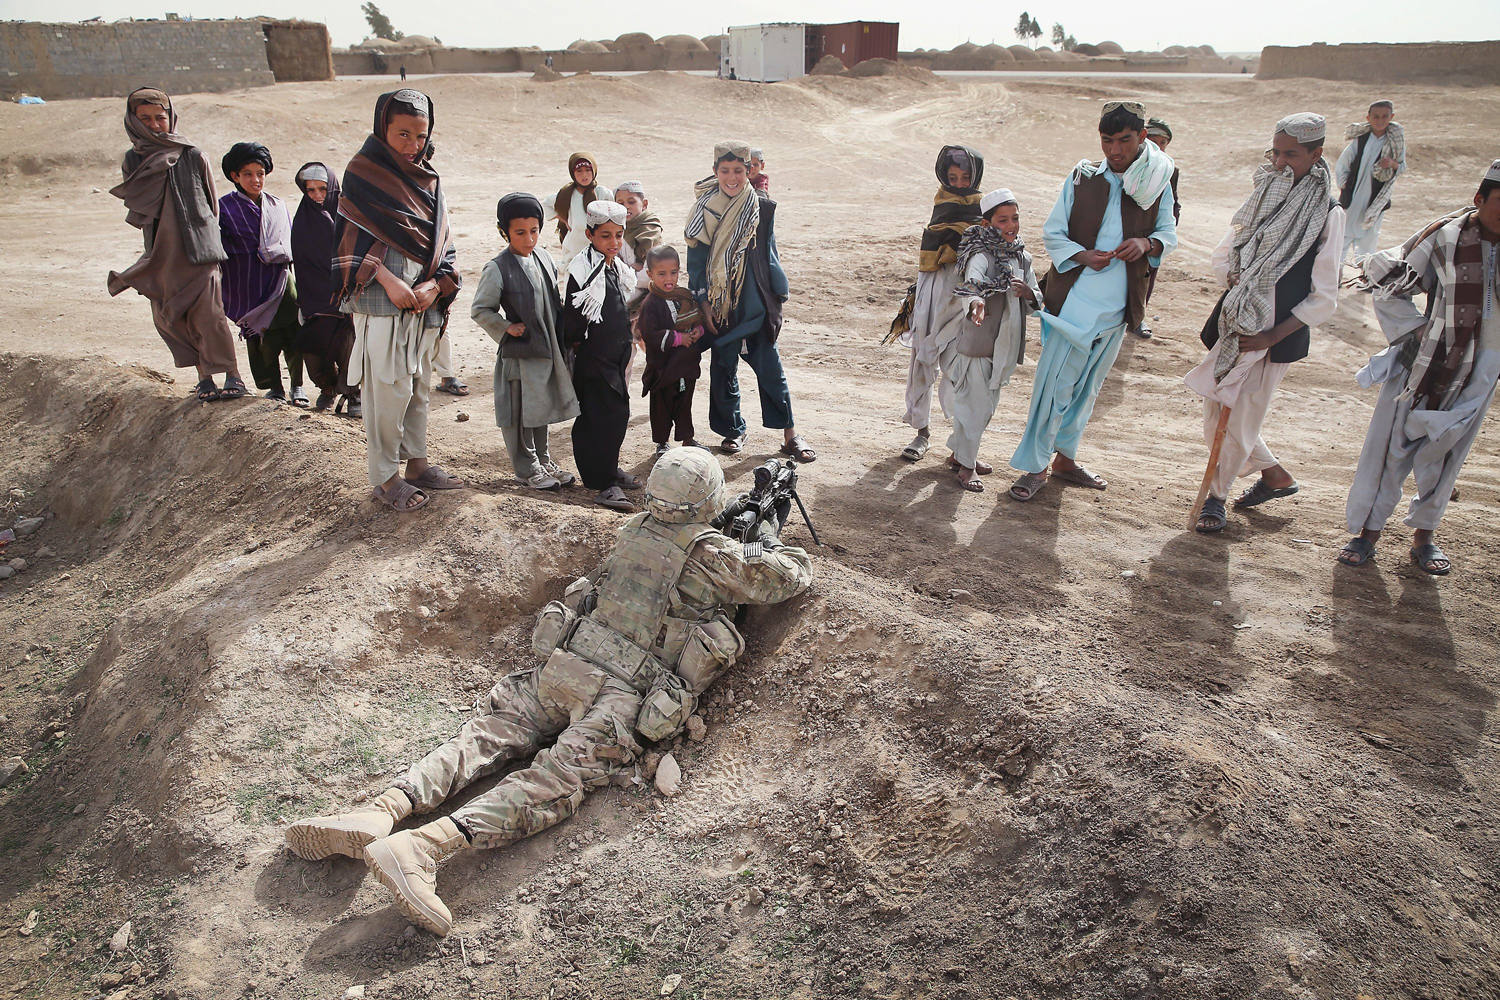 *** BESTPIX *** U.S. Soldiers Provide Security Around Kandahar Airfield